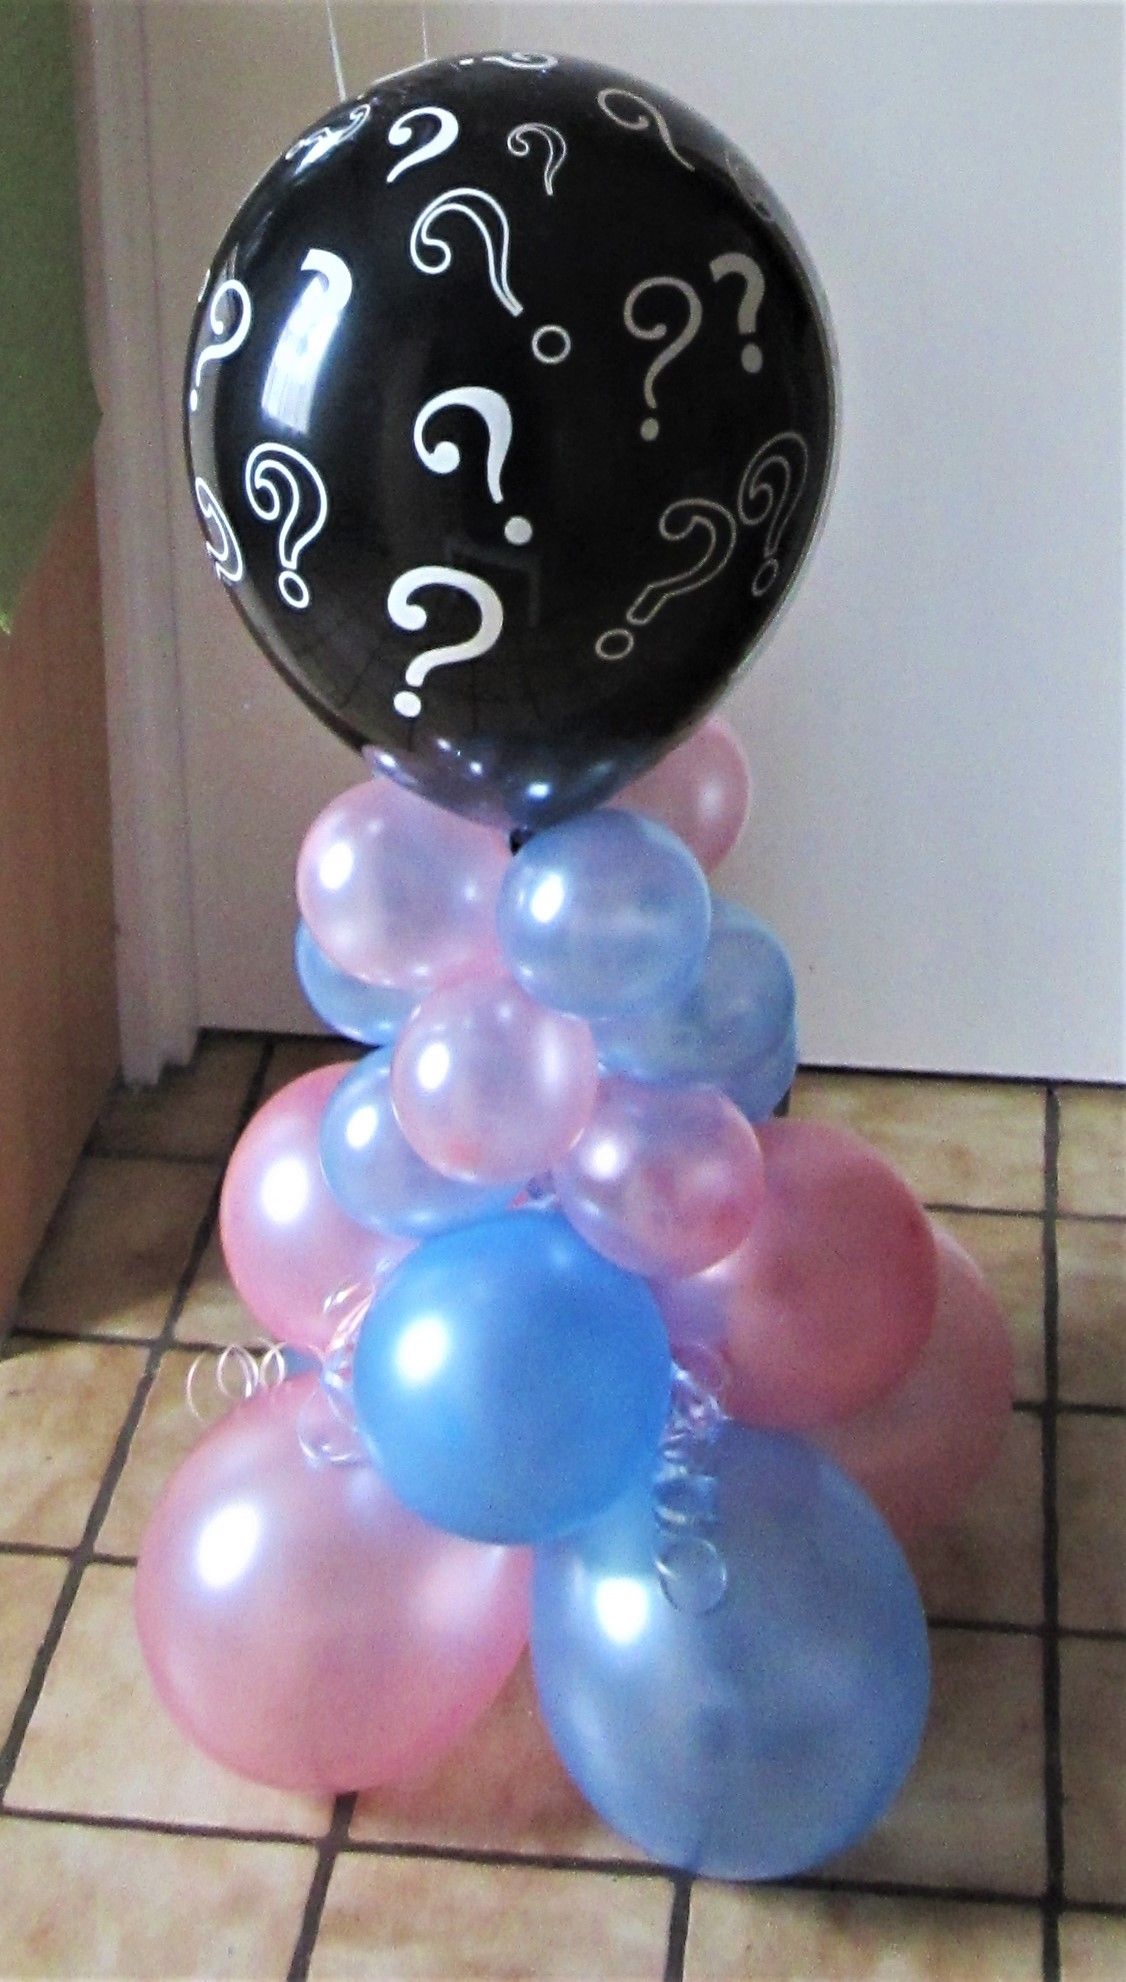 Gender Ballonsäule, Gender Reveal Ballon,  Ballon zur Geschlechtsbestimmung, Boy or Girl, Babyparty, Genderballon, Genderballon Worms